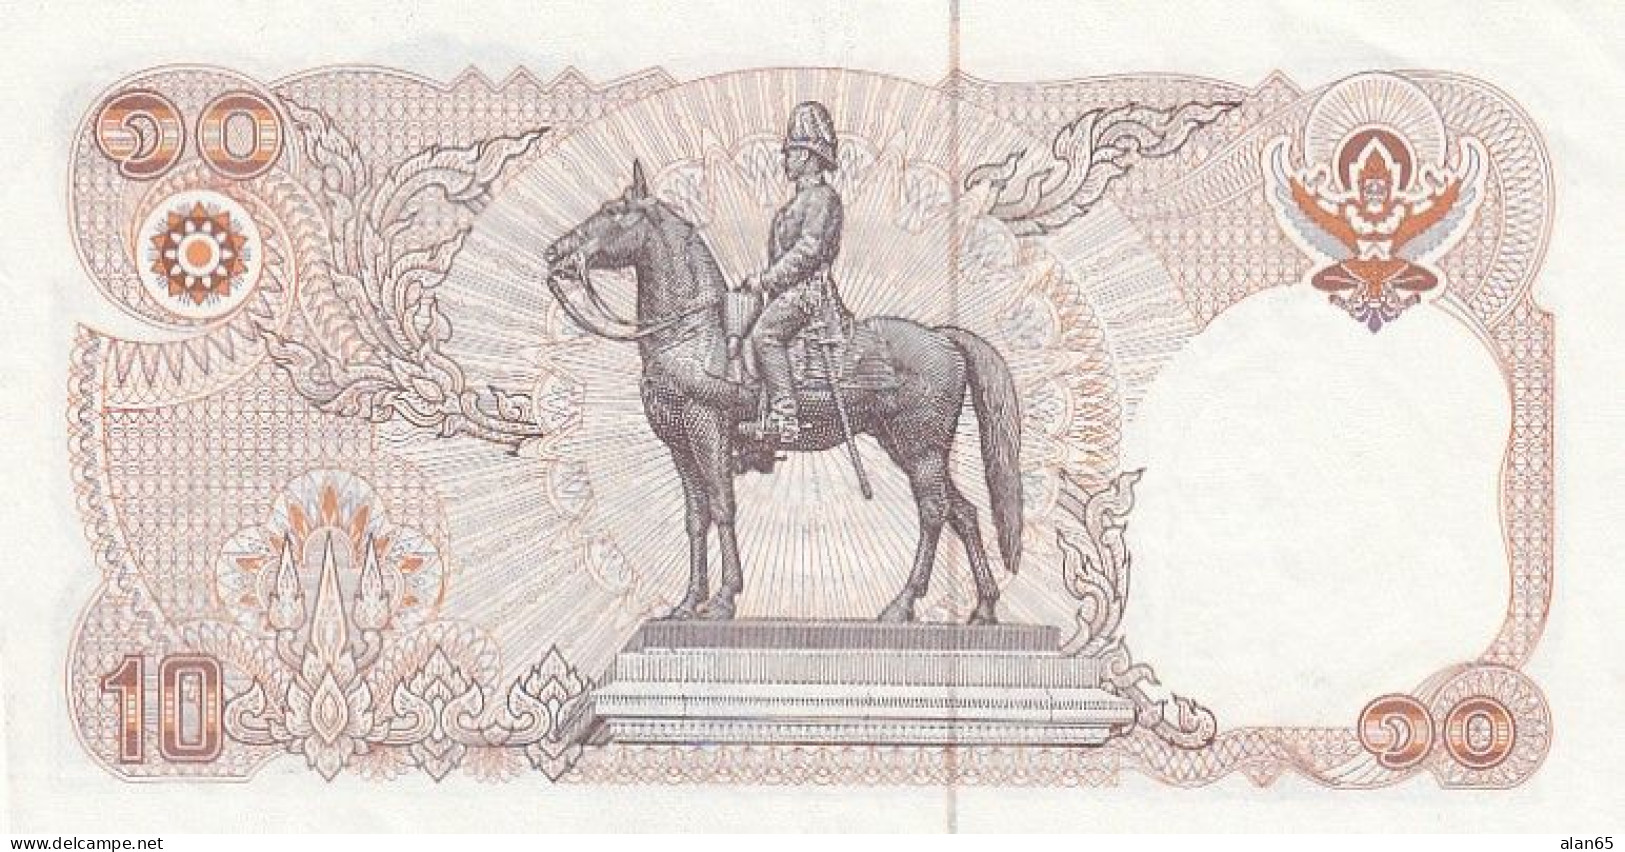 Thailand, #87,10 Baht C1980 Banknote - Thaïlande